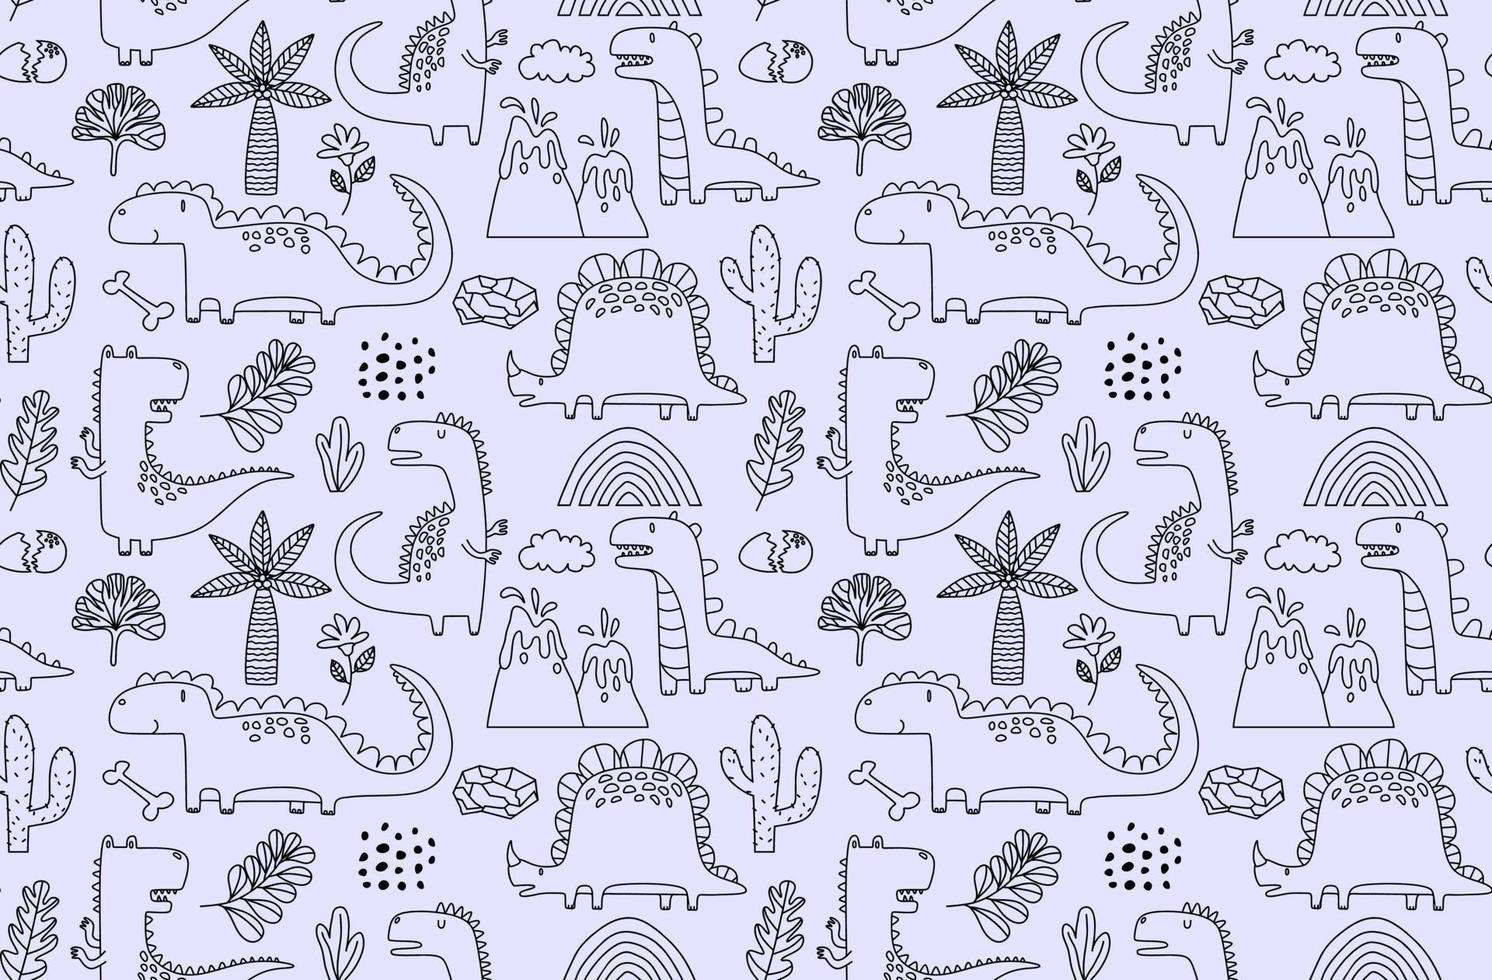 patrón impecable con dinosaurios dibujados a mano en estilo escandinavo. vector